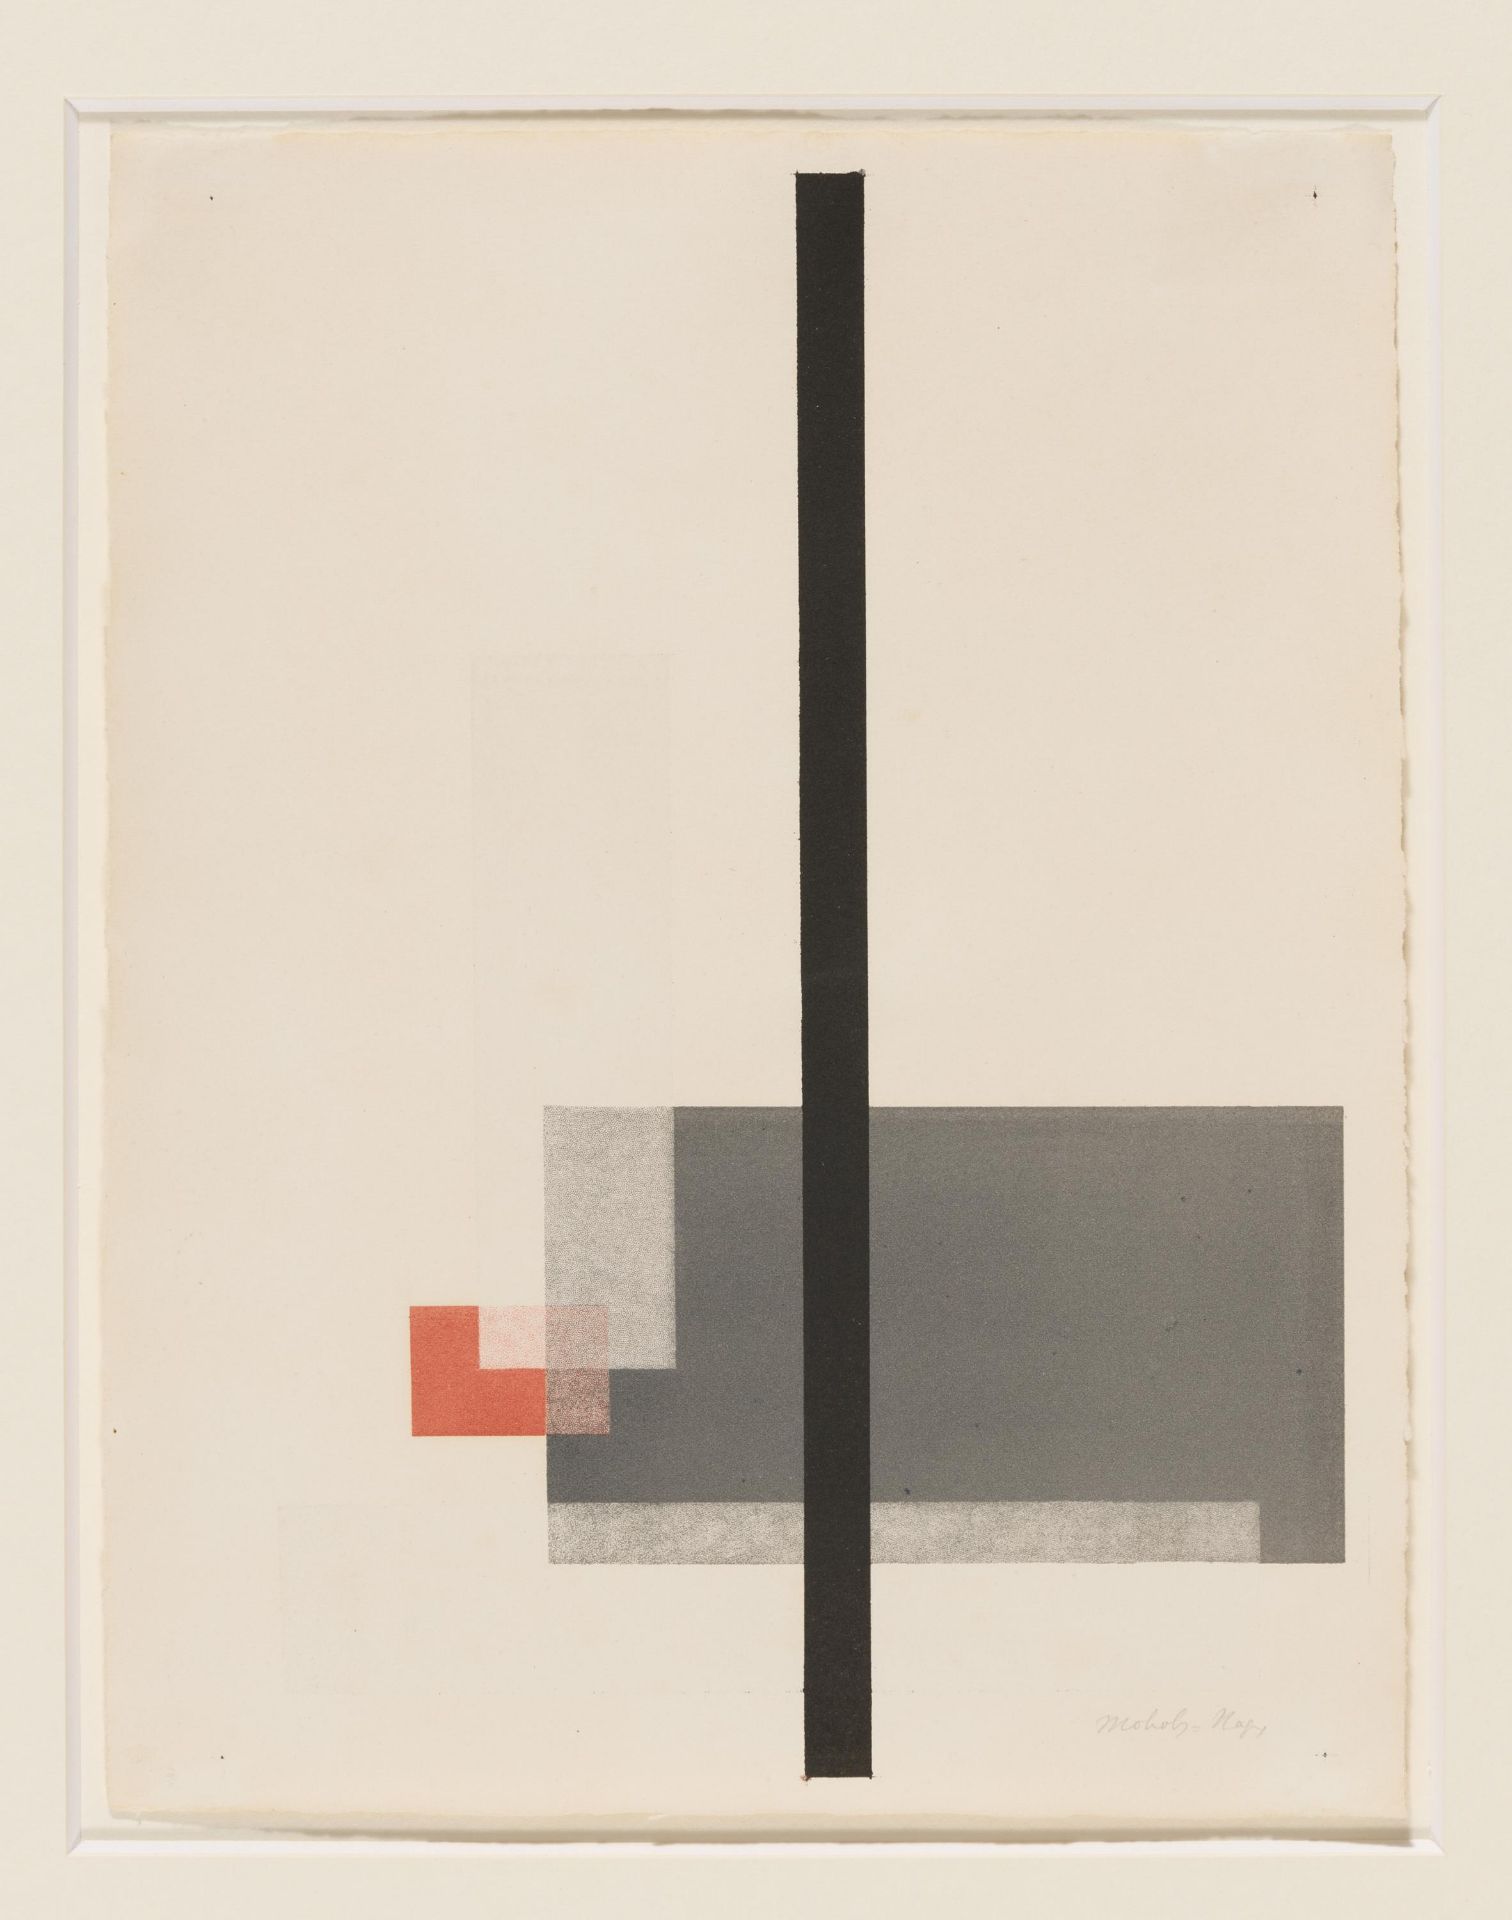 Lászlò Moholy-Nagy: Untitled (Komposition) - Image 2 of 3